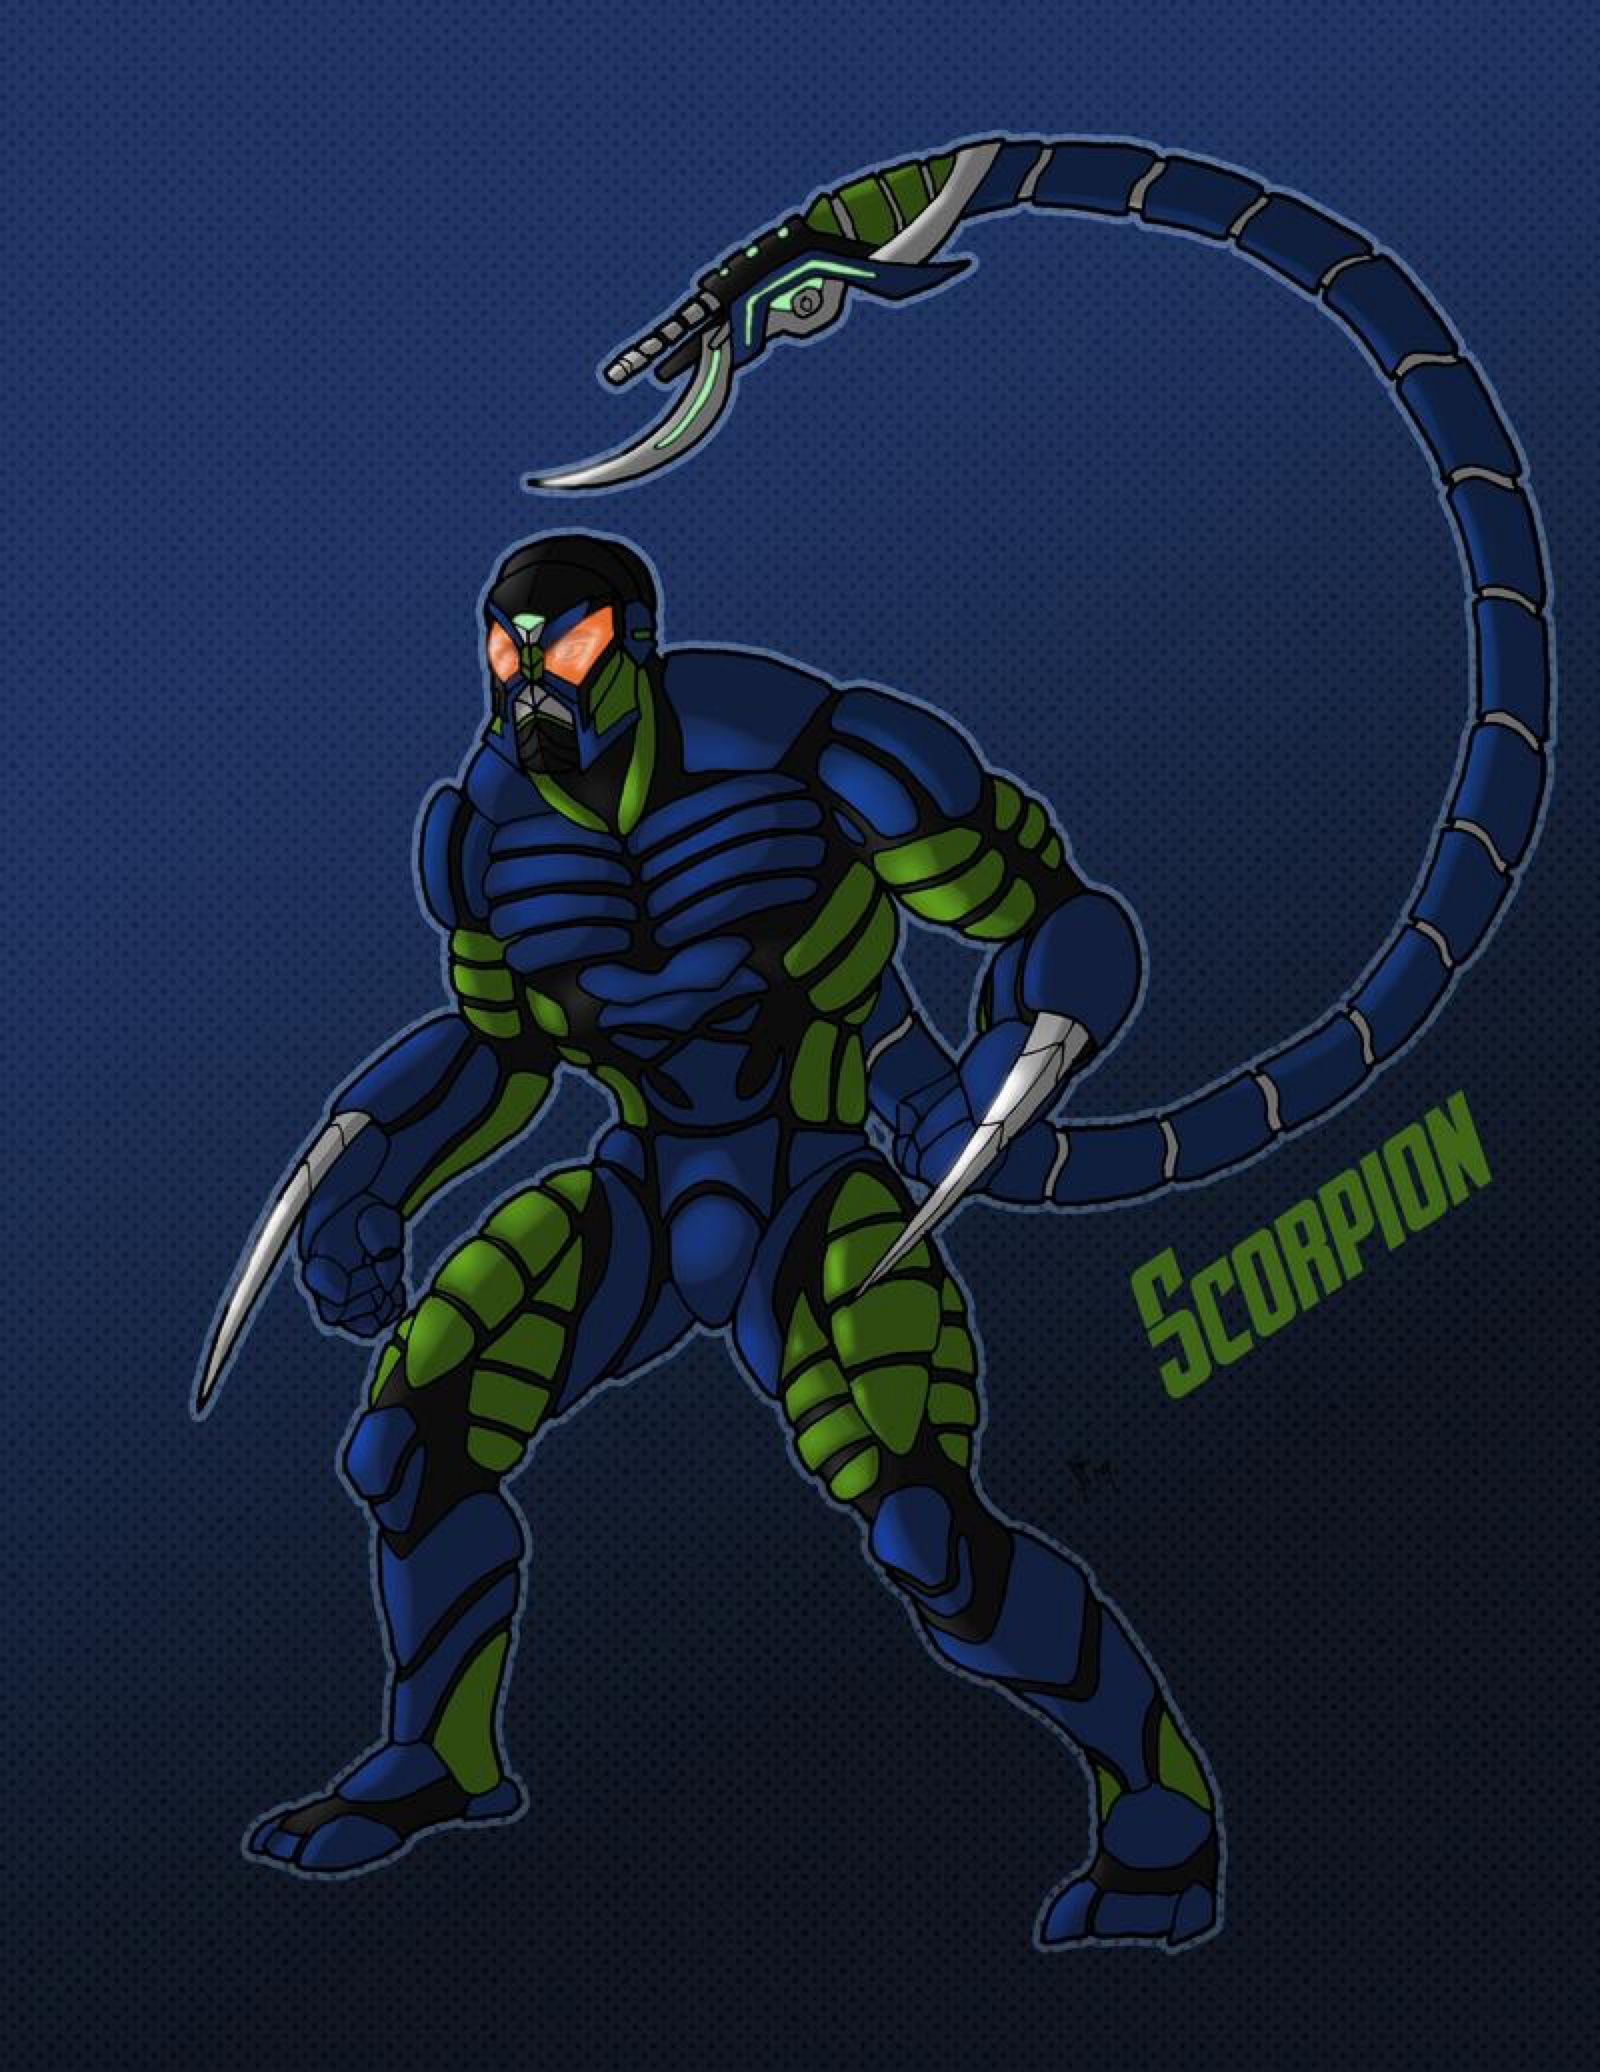 Marvel: Scorpion alternate colors. Marvel characters art, Spiderman artwork, Marvel universe characters